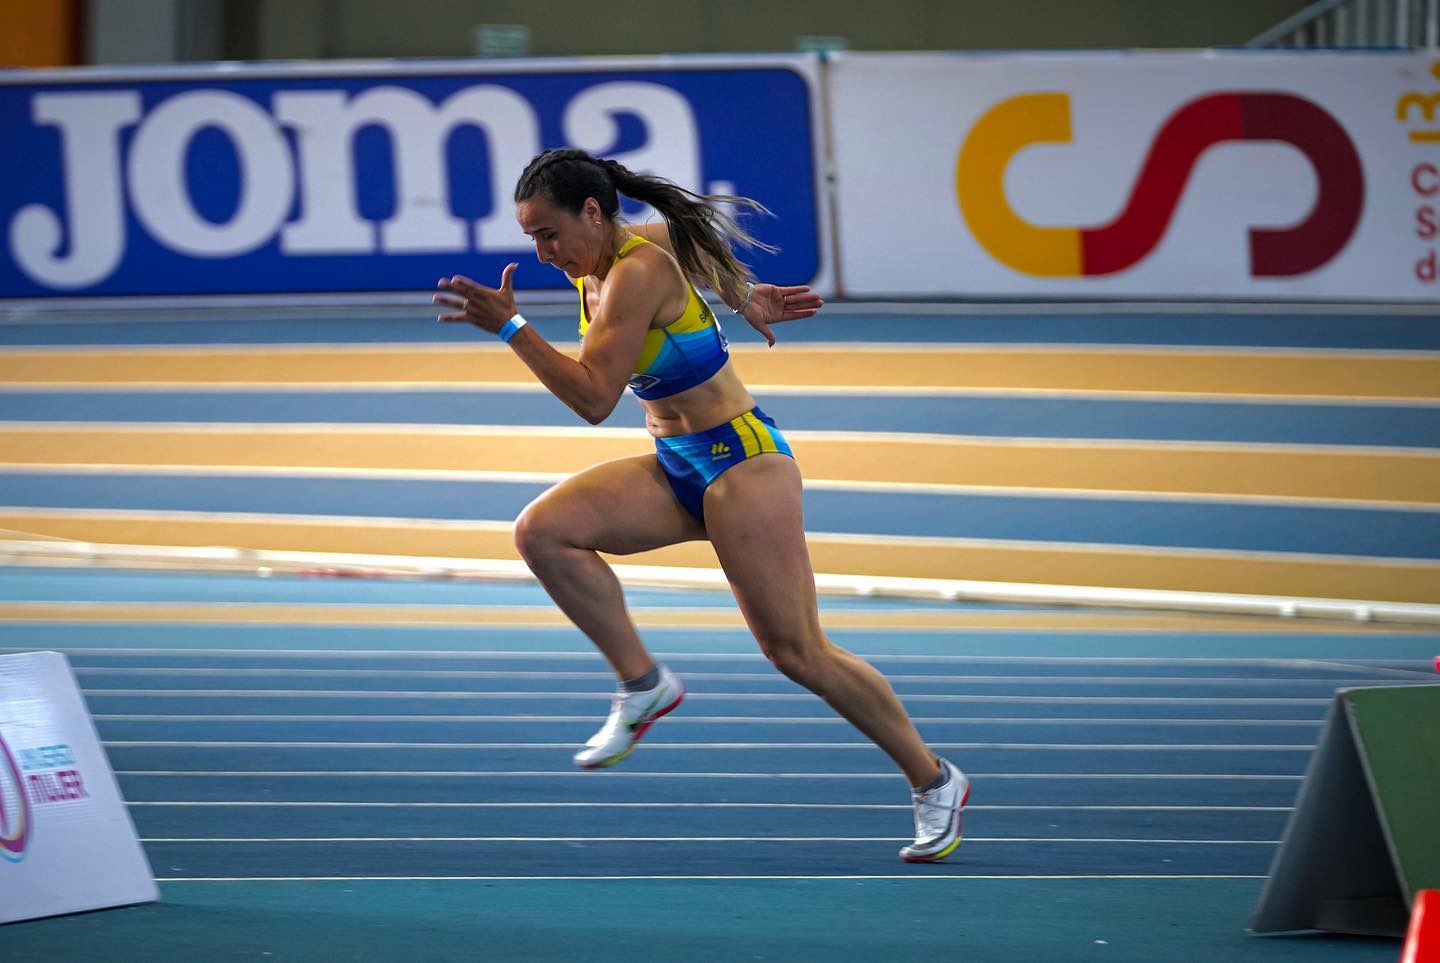 Alba Pérez récord de Huelva en 100 metros en el Meeting de Coria